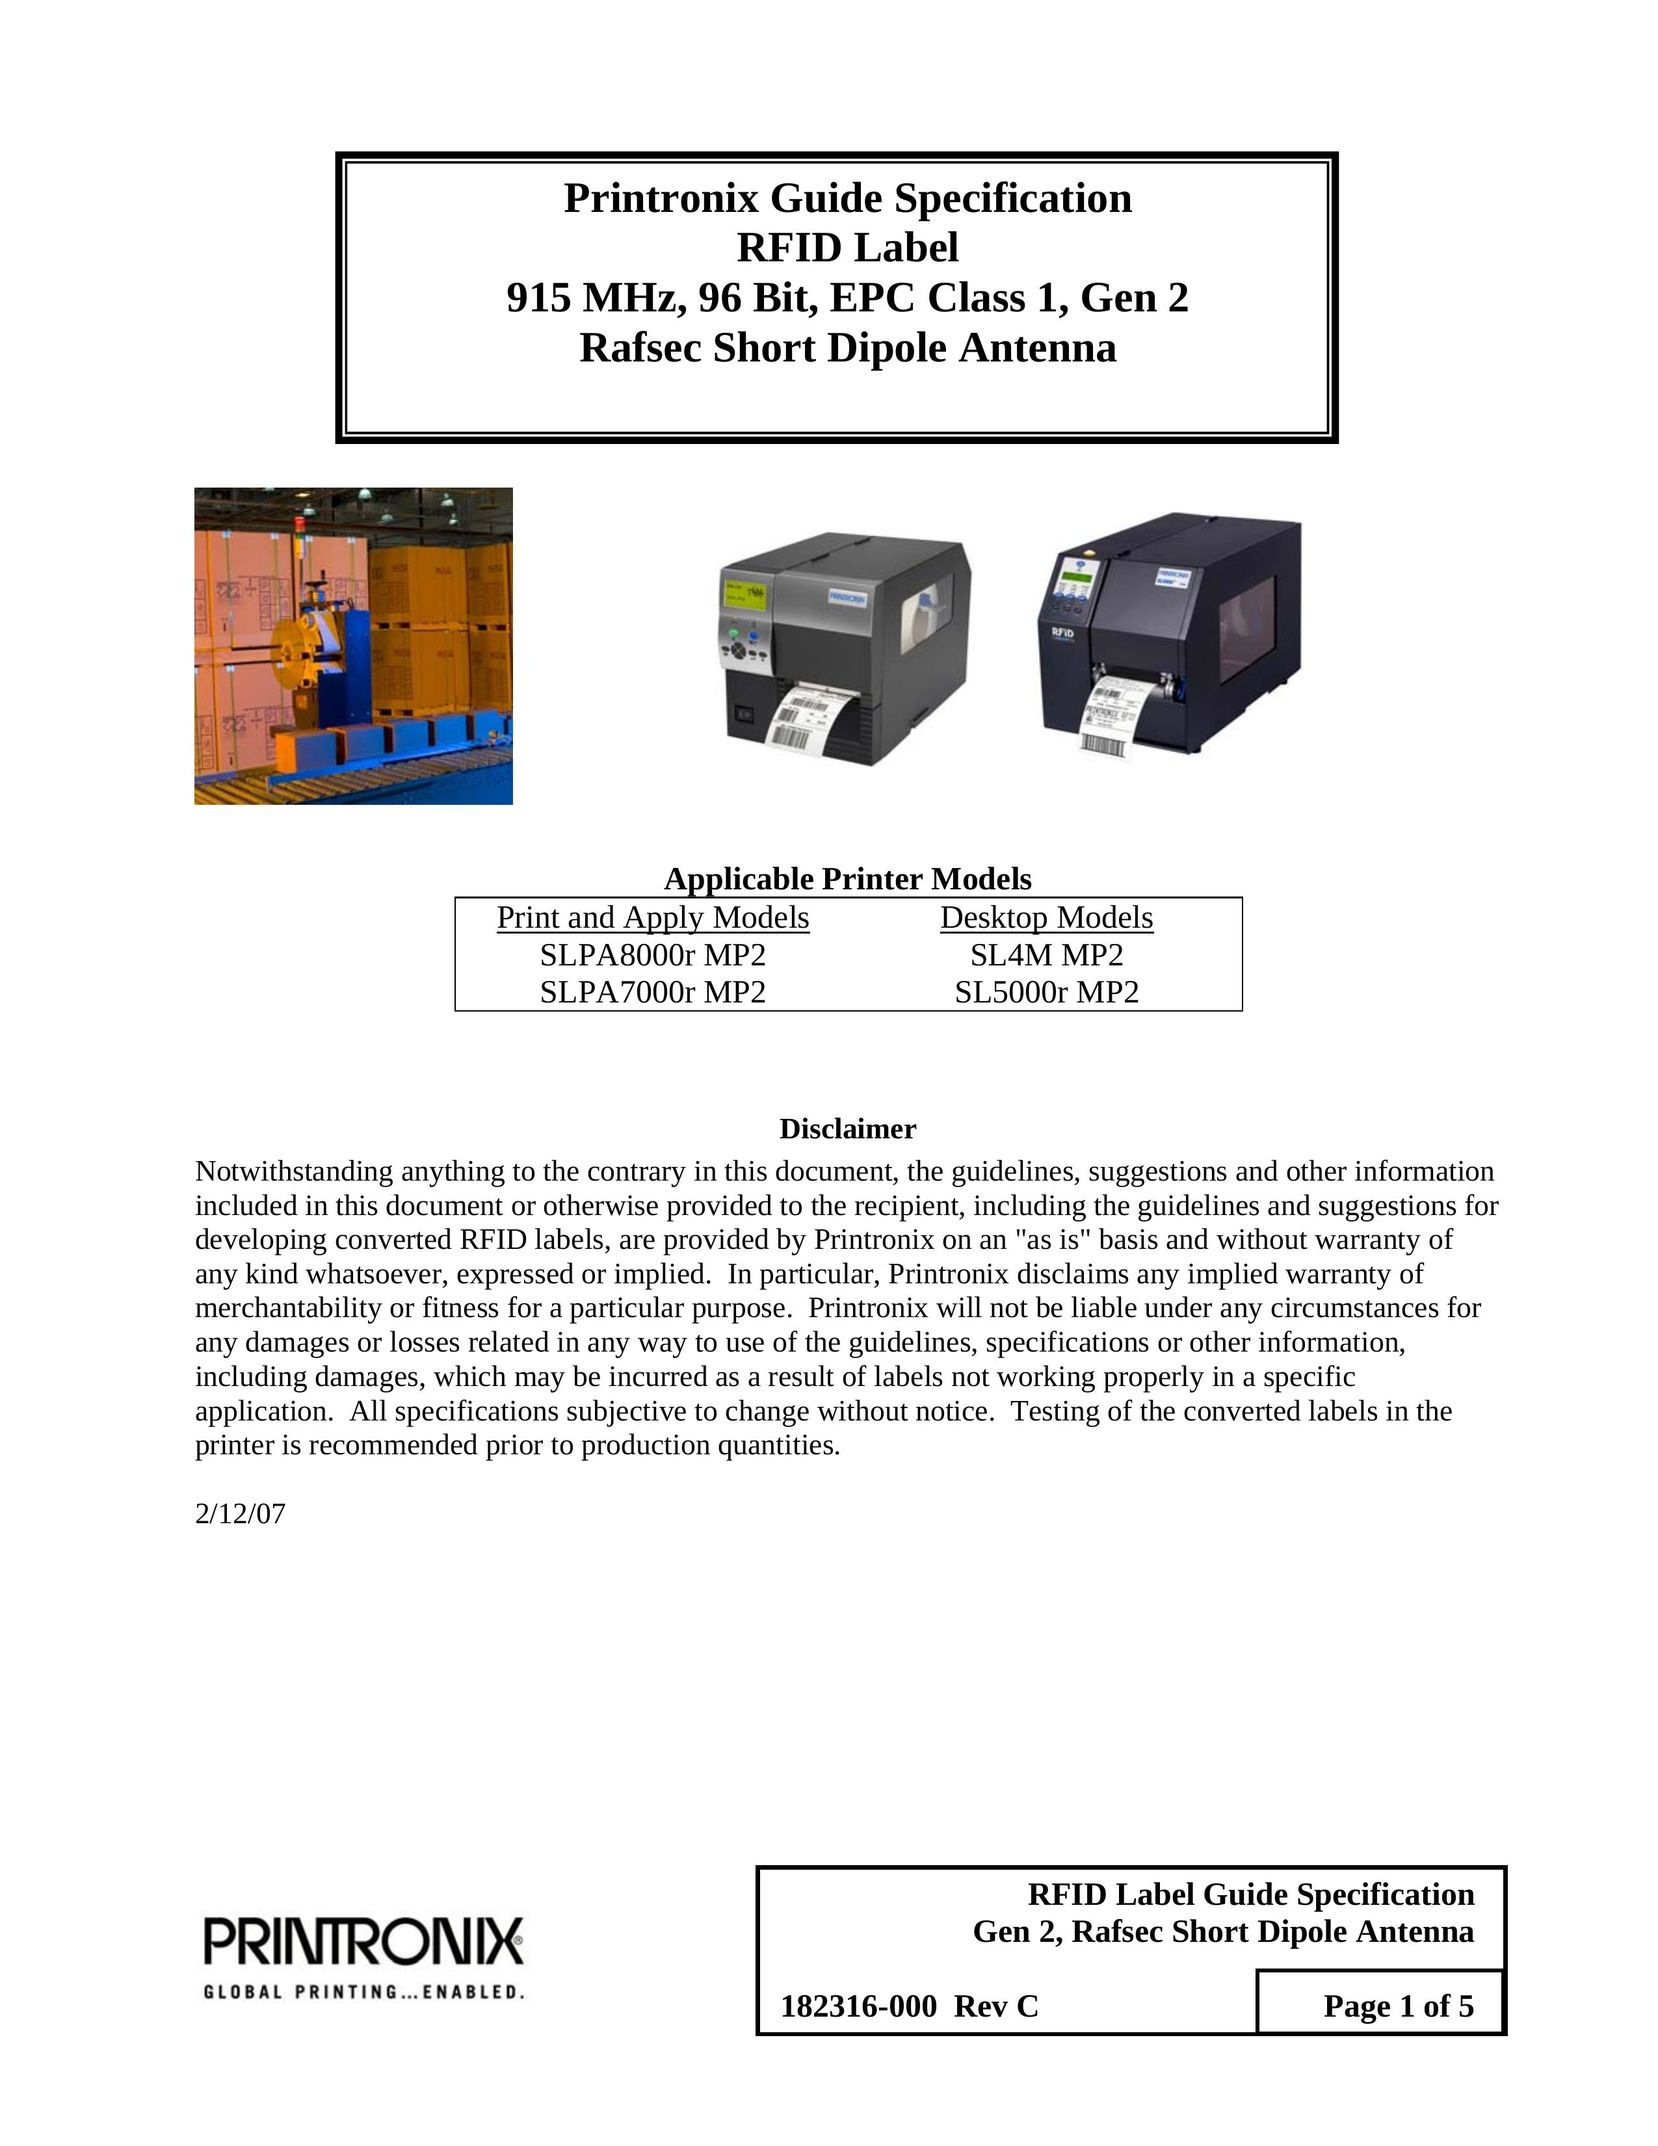 Printronix SLPA7000r MP2 Printer User Manual